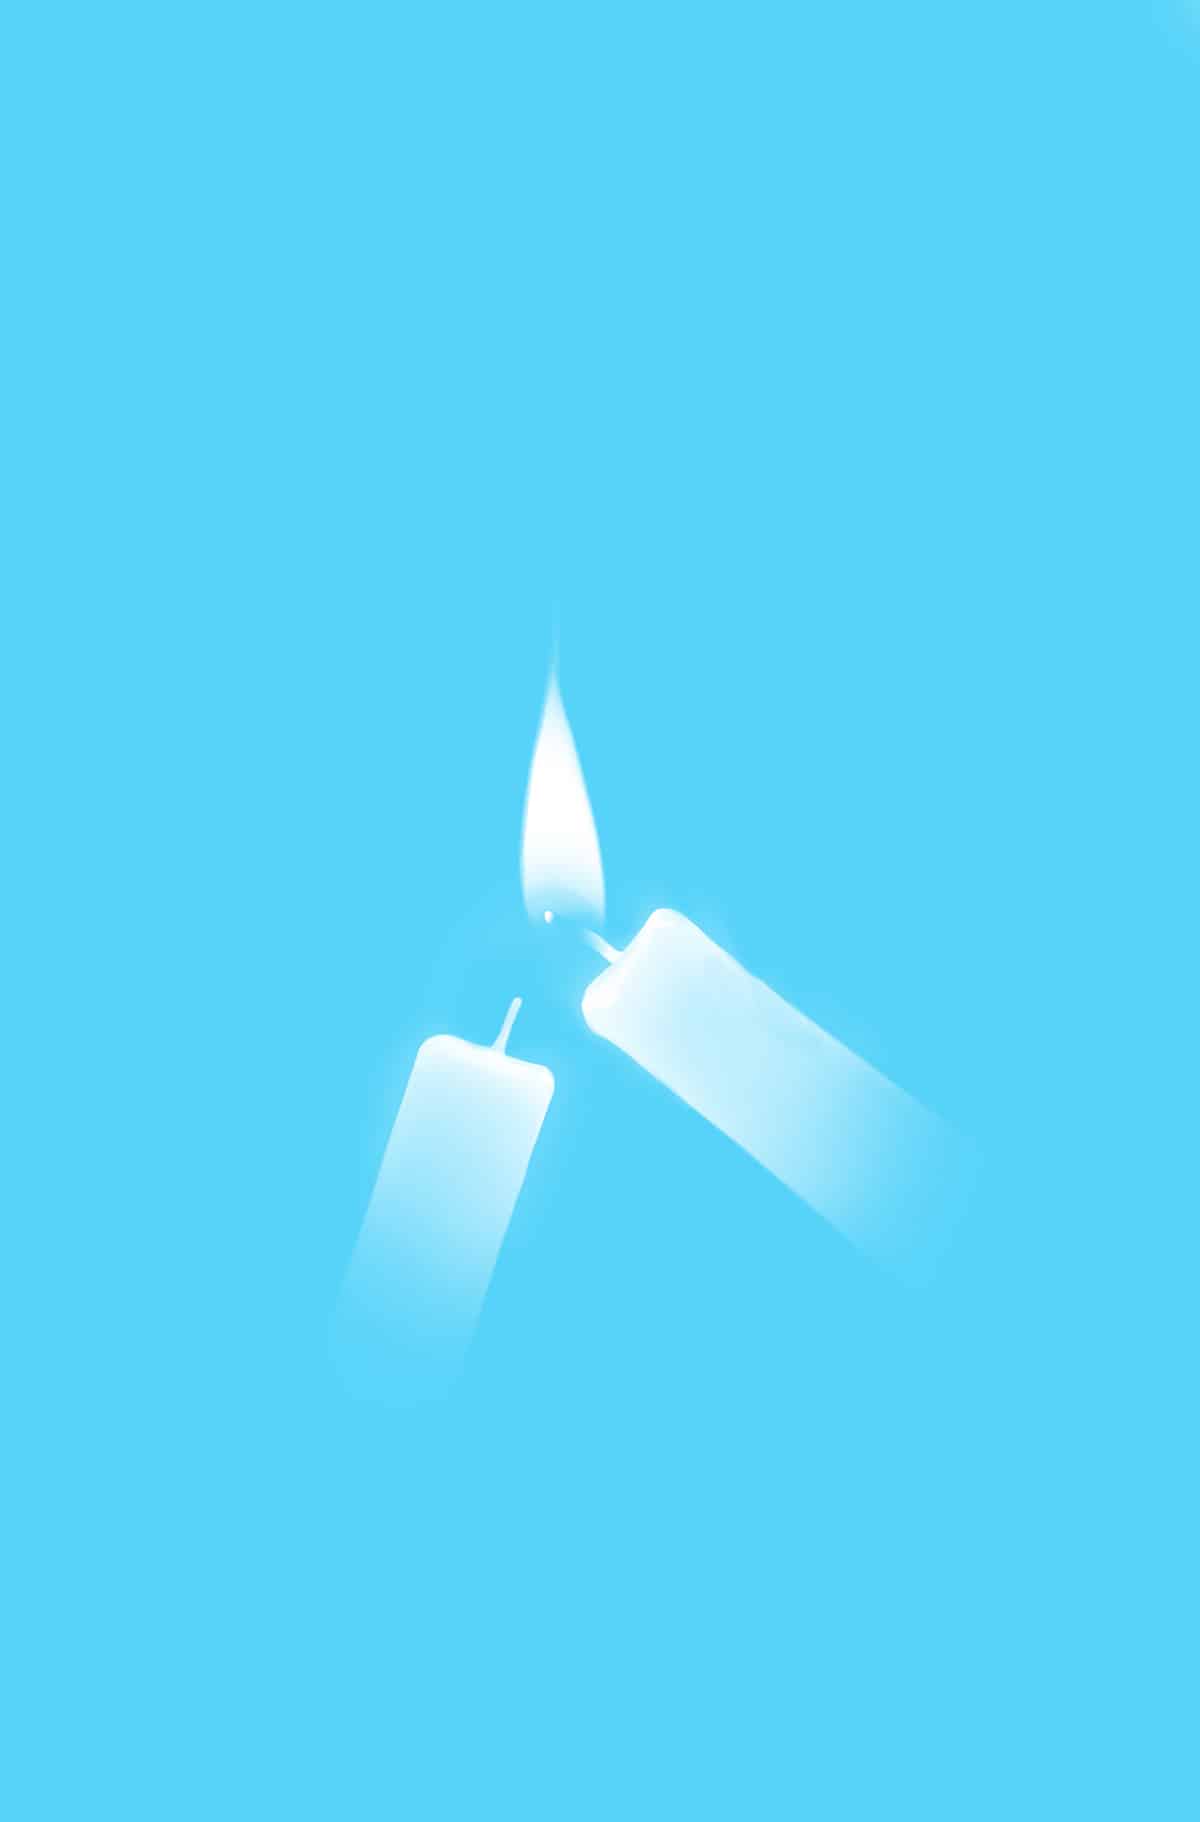 Thatgamecompany Teaser Candle